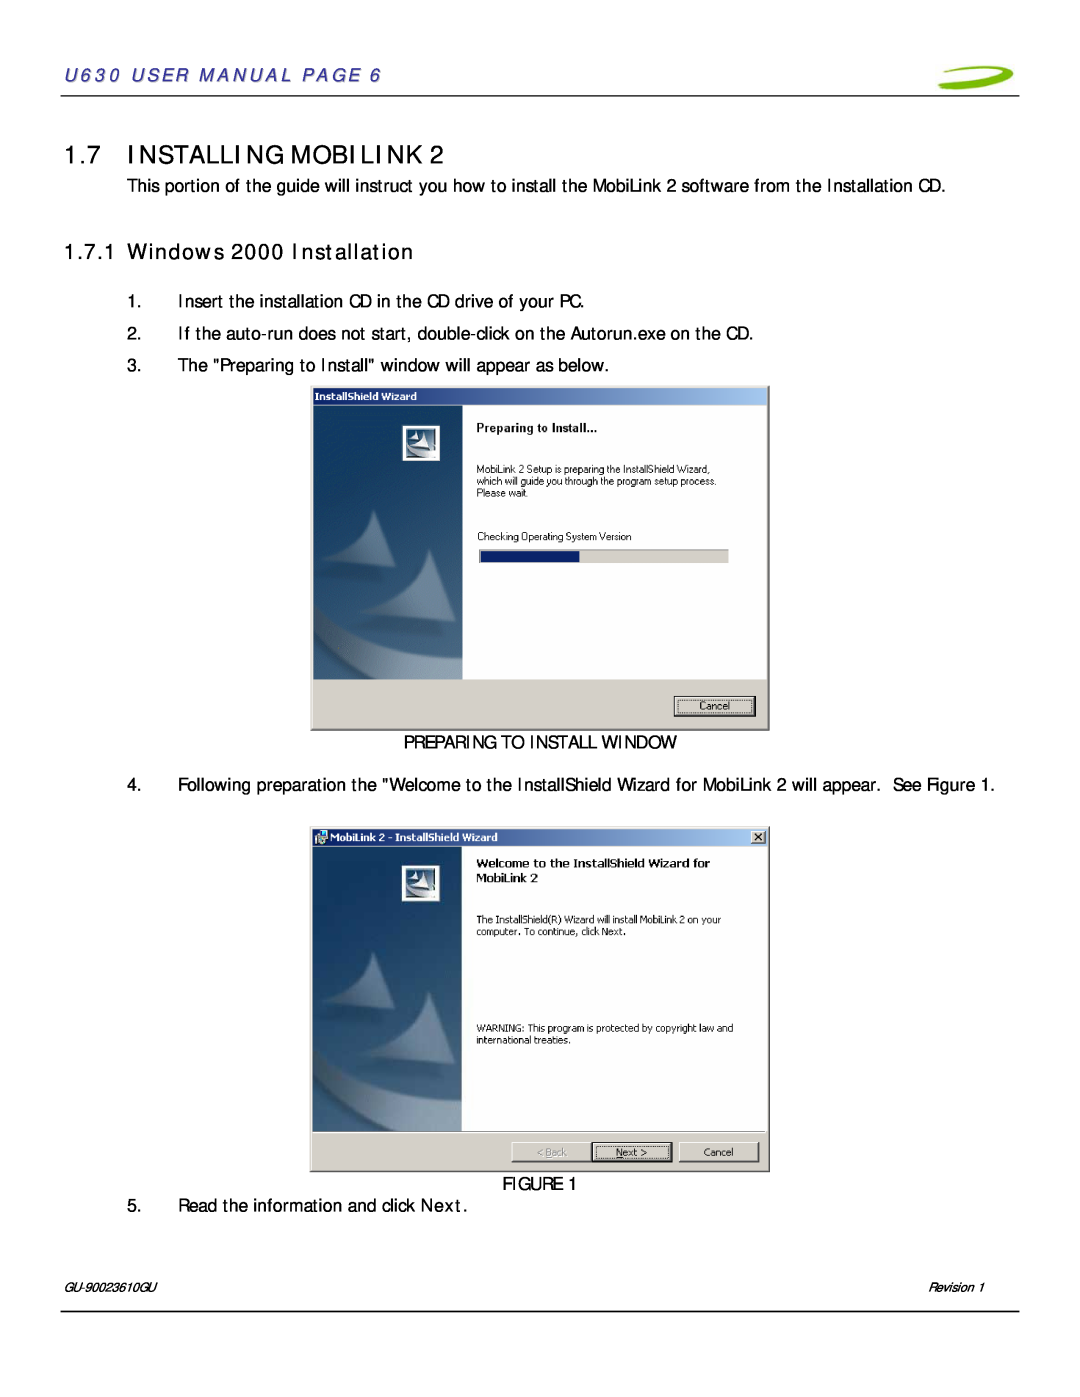 InFocus user manual Installing Mobilink, Windows 2000 Installation, U630 USER MANUAL PAGE 